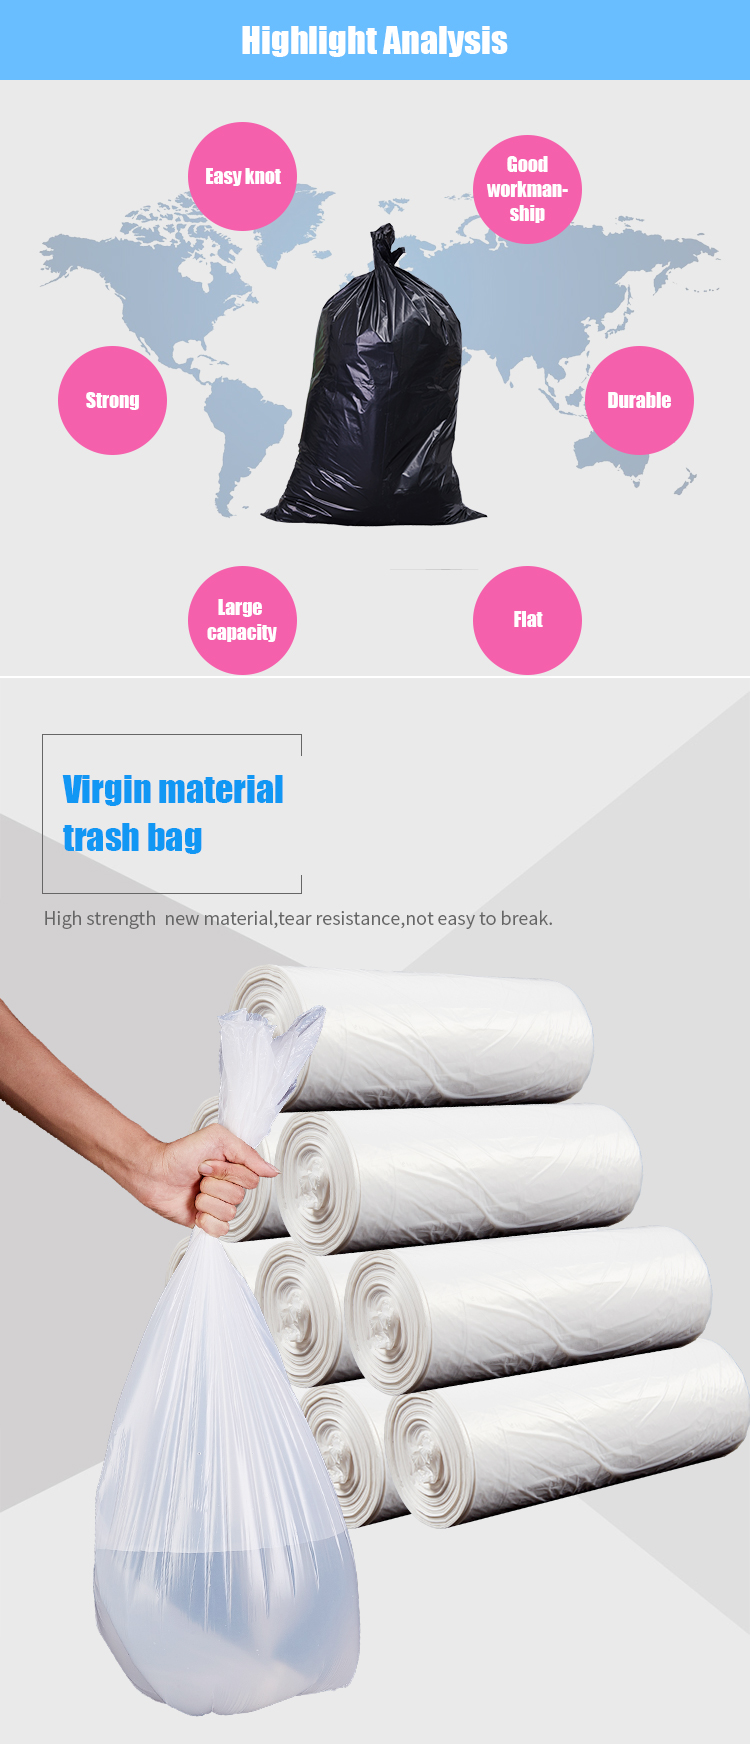 Custom Size Drawstring Biodegradable Plastic Roll Garbage Bags